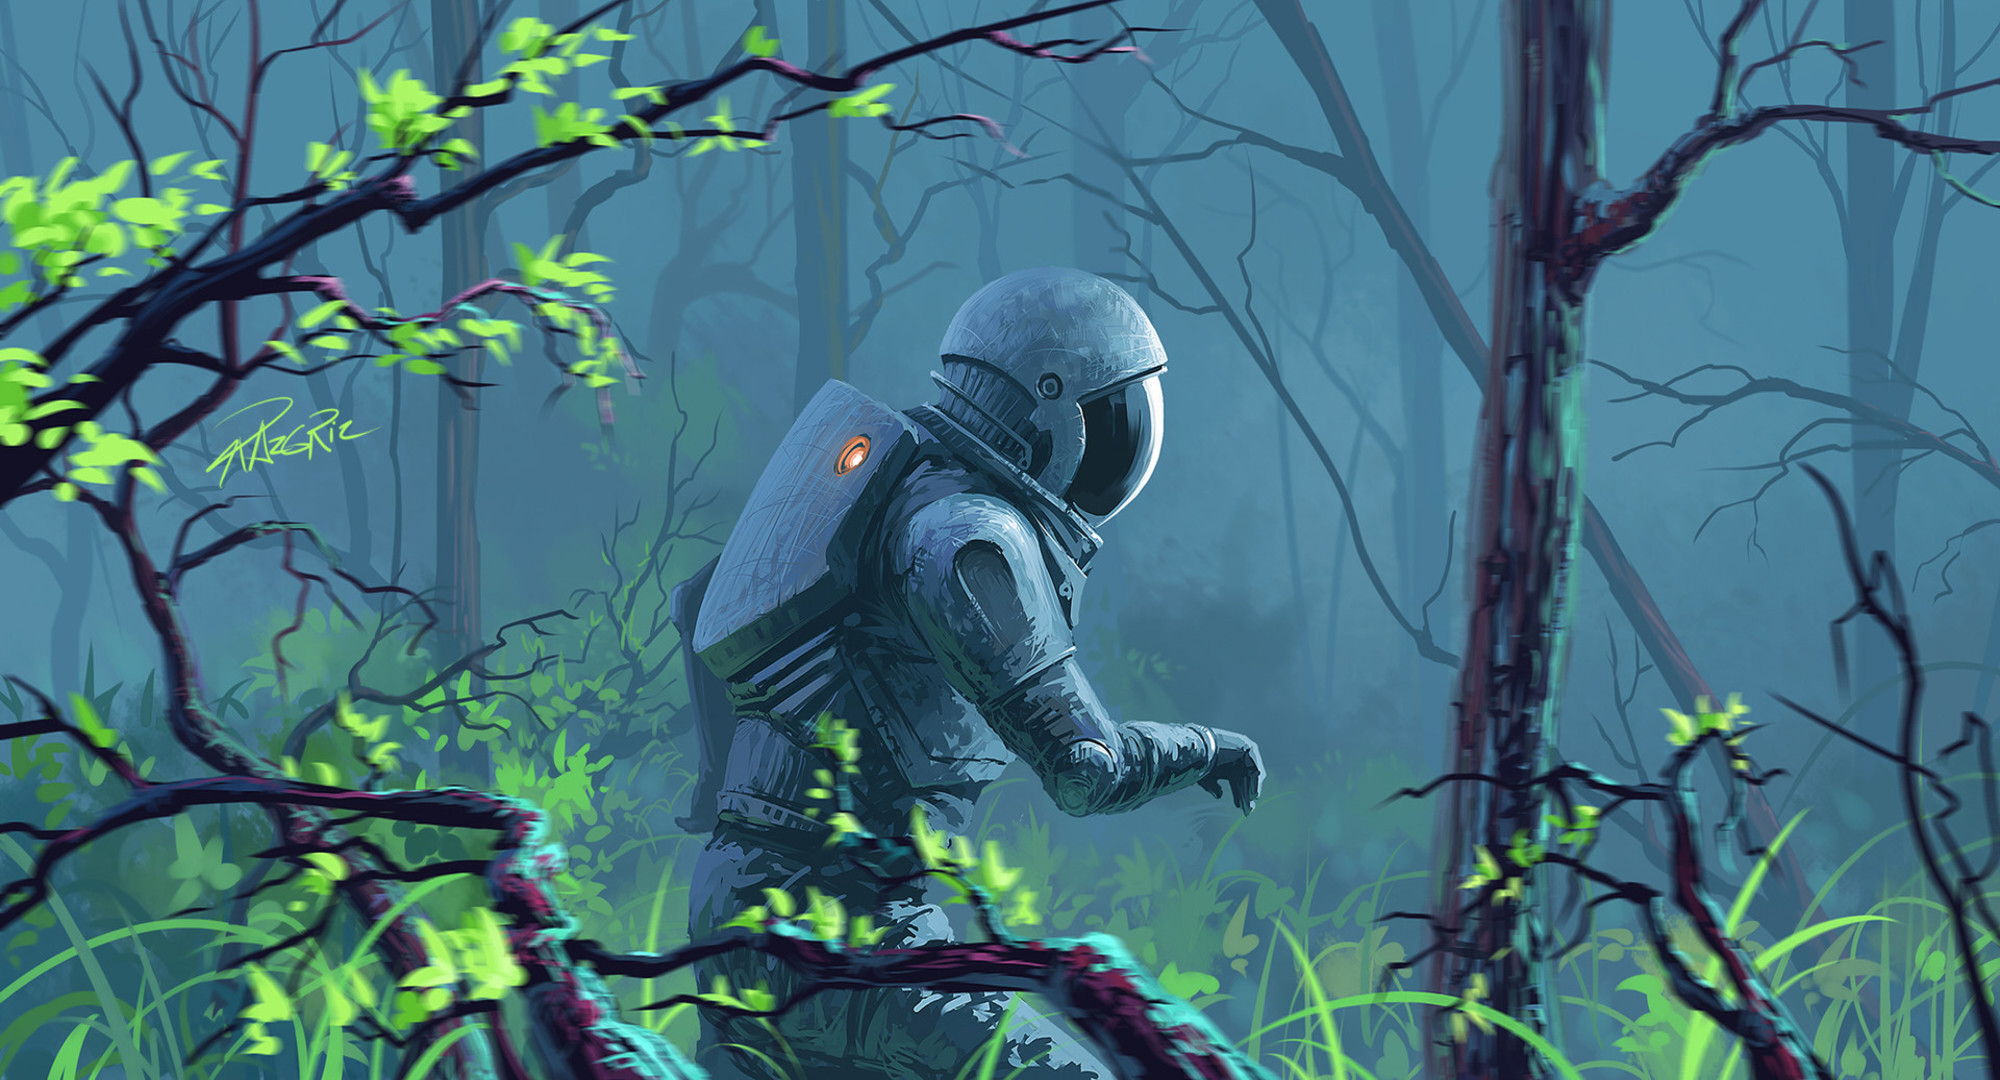 Astronaut walking through an alien jungle by Roman Avseenko